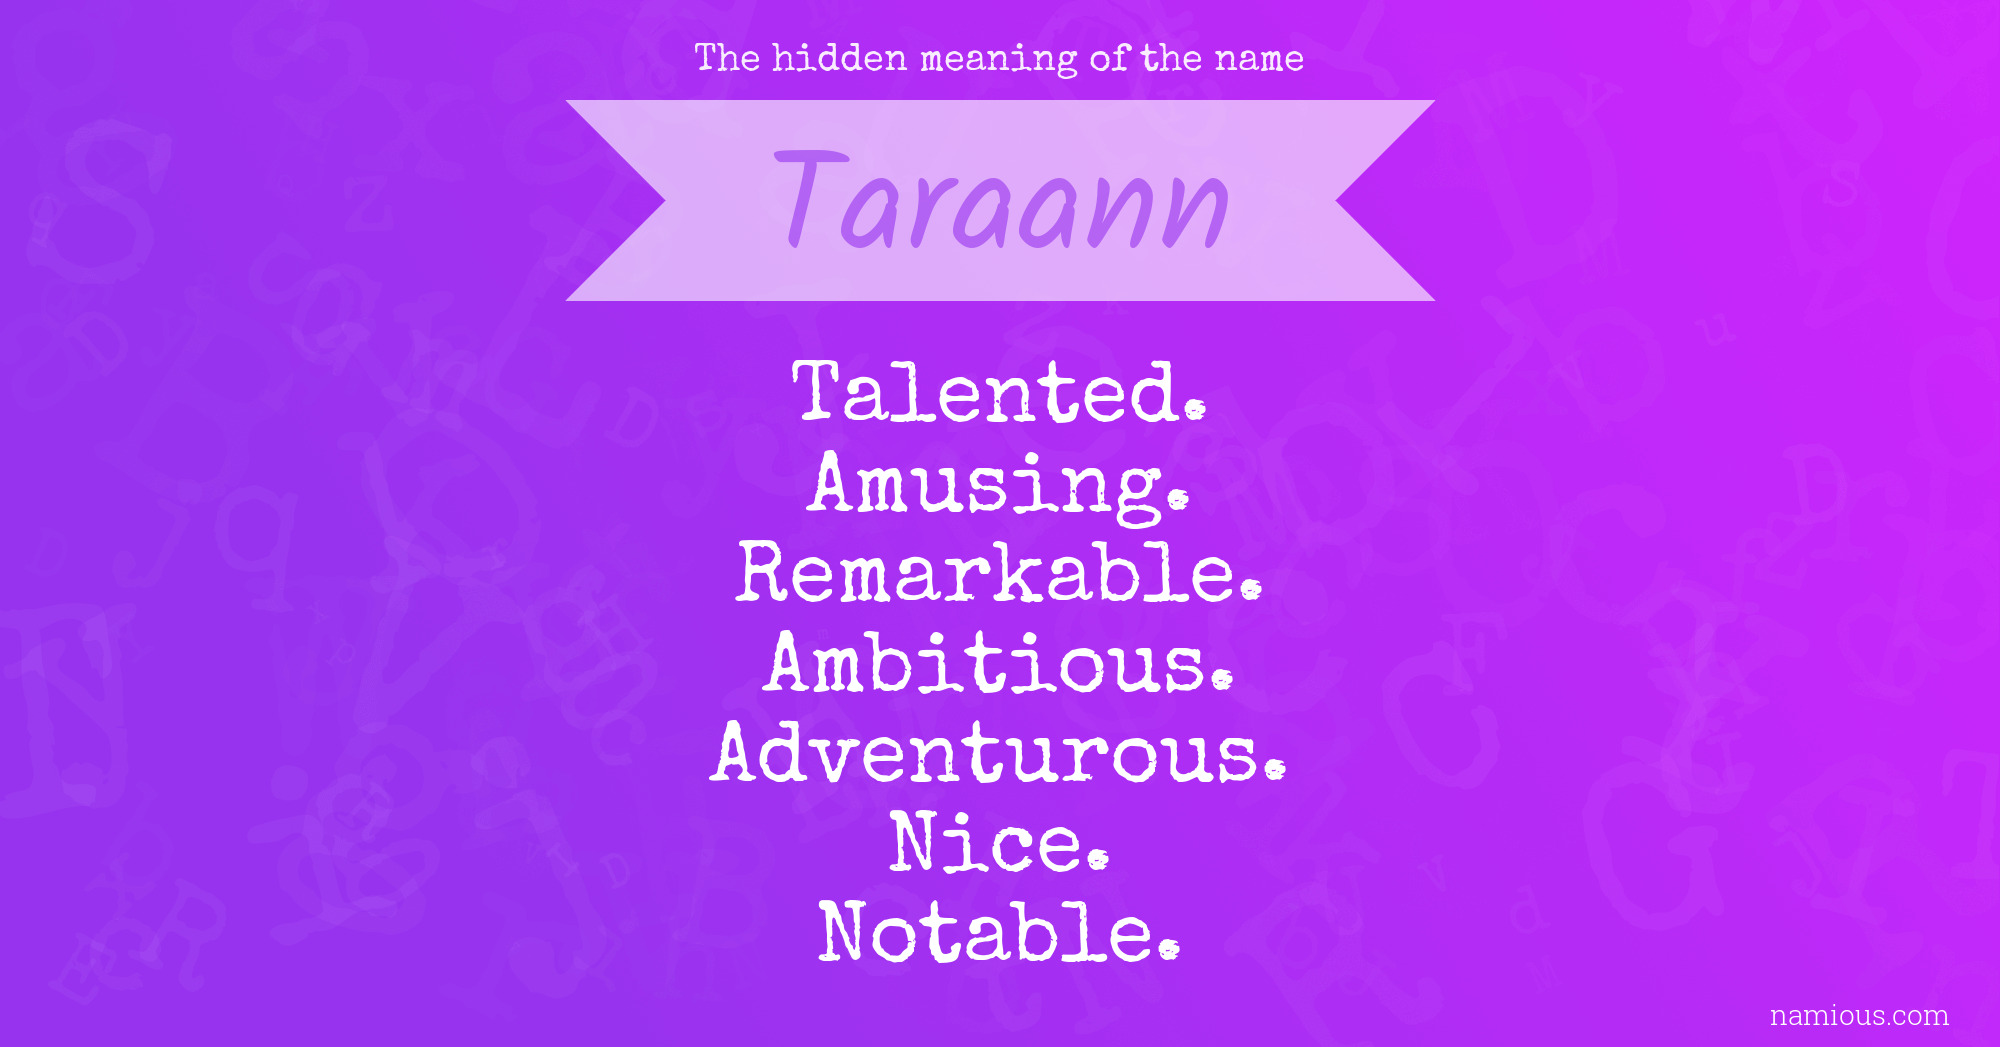 The hidden meaning of the name Taraann